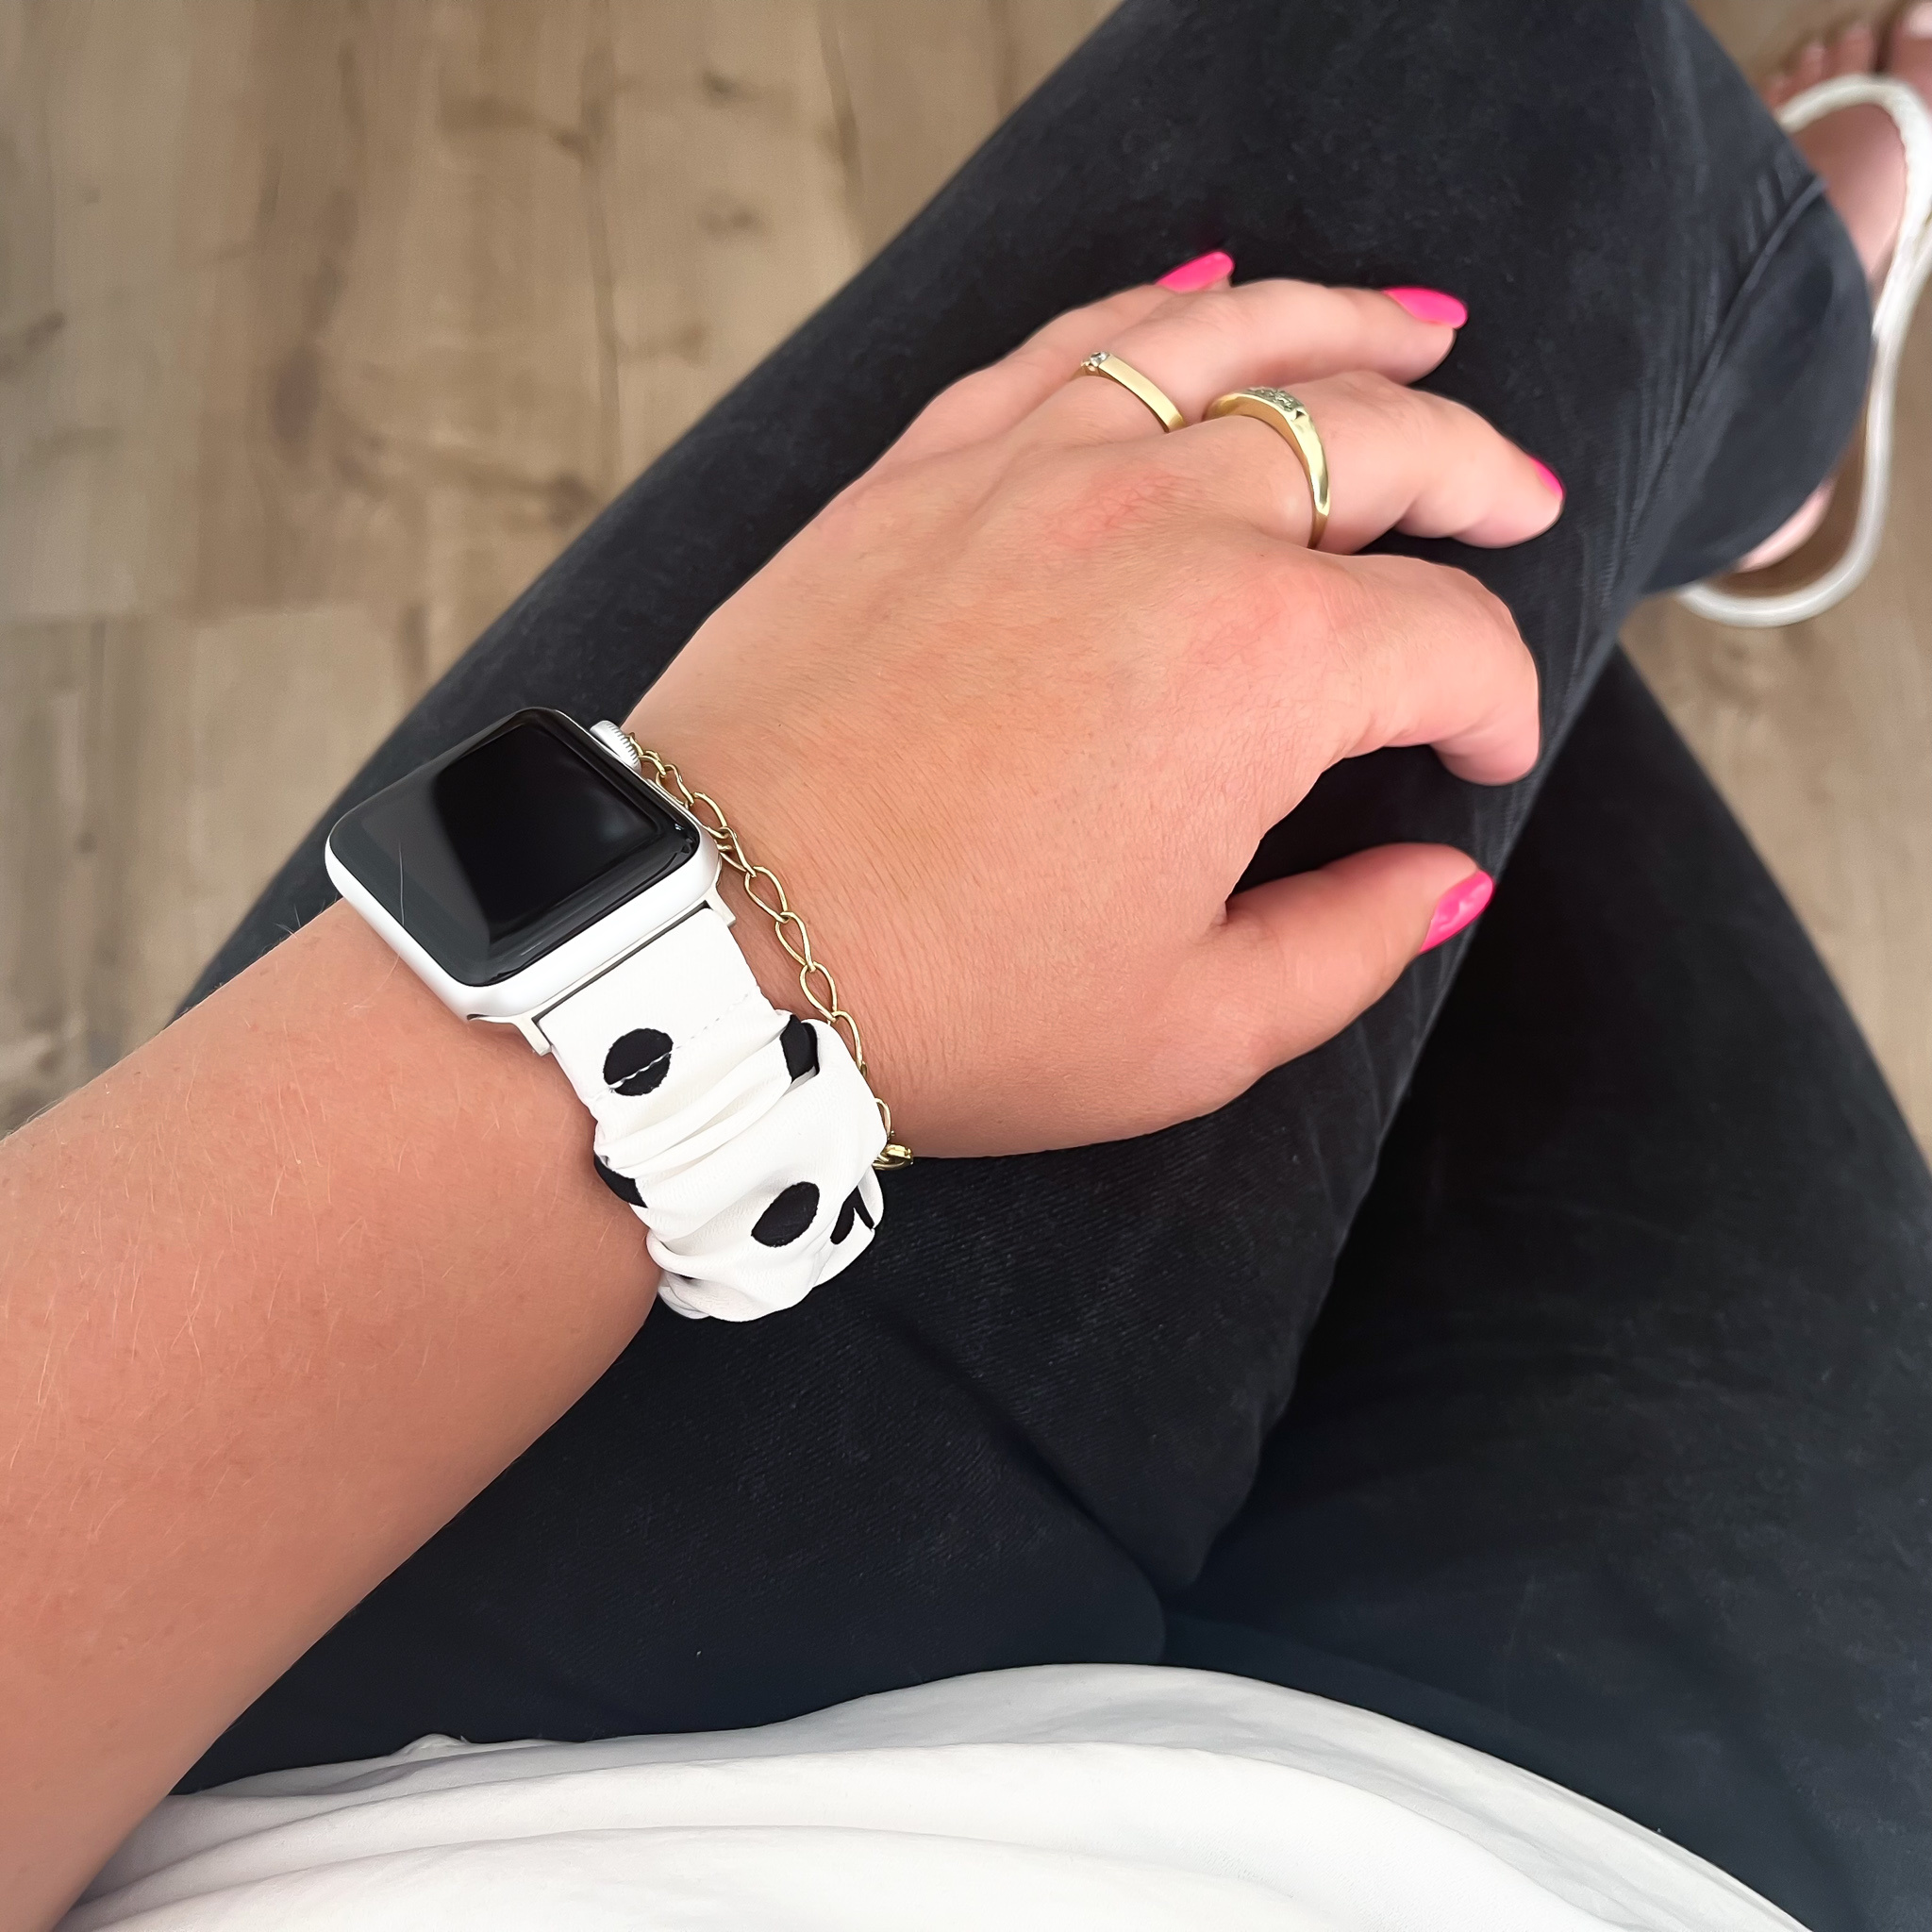 Bracelet nylon chouchou Apple Watch - blanc à pois noirs